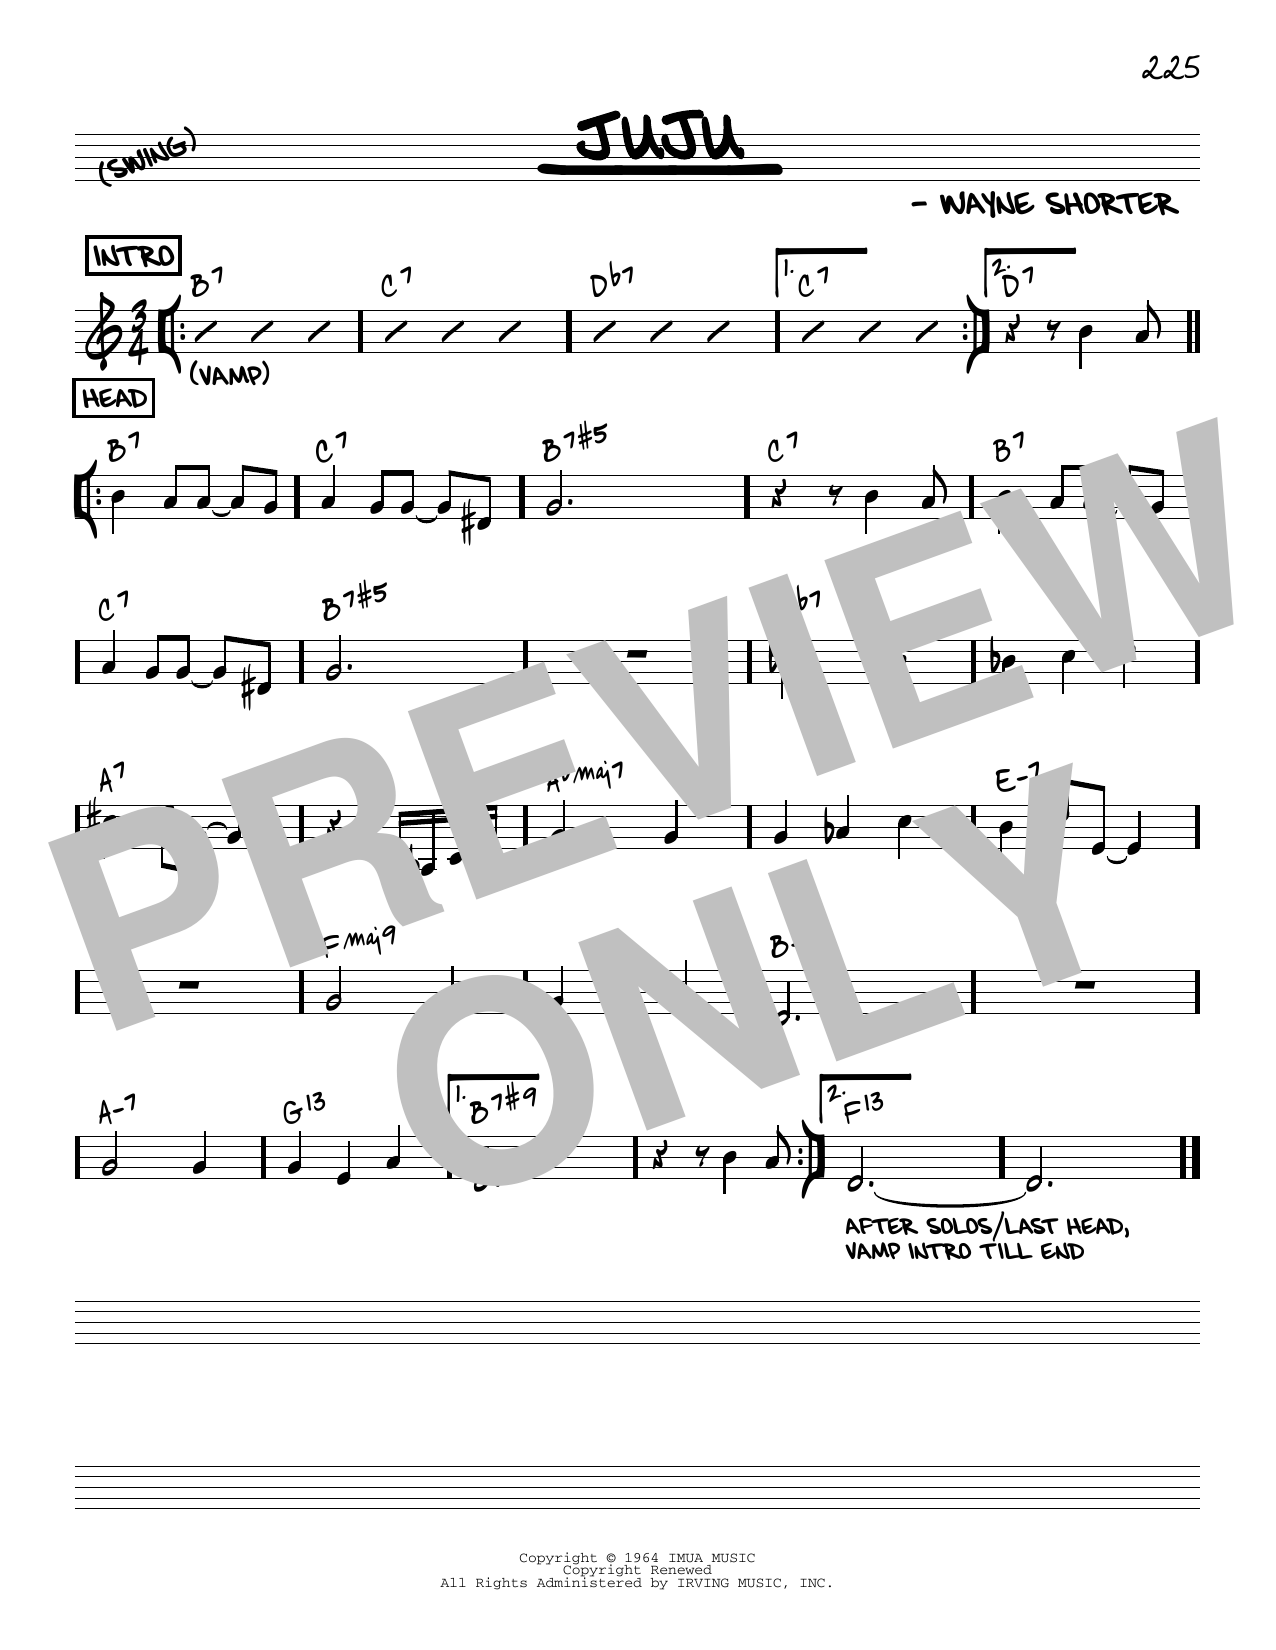 Wayne Shorter Juju [Reharmonized version] (arr. Jack Grassel) Sheet Music Notes & Chords for Real Book – Melody & Chords - Download or Print PDF